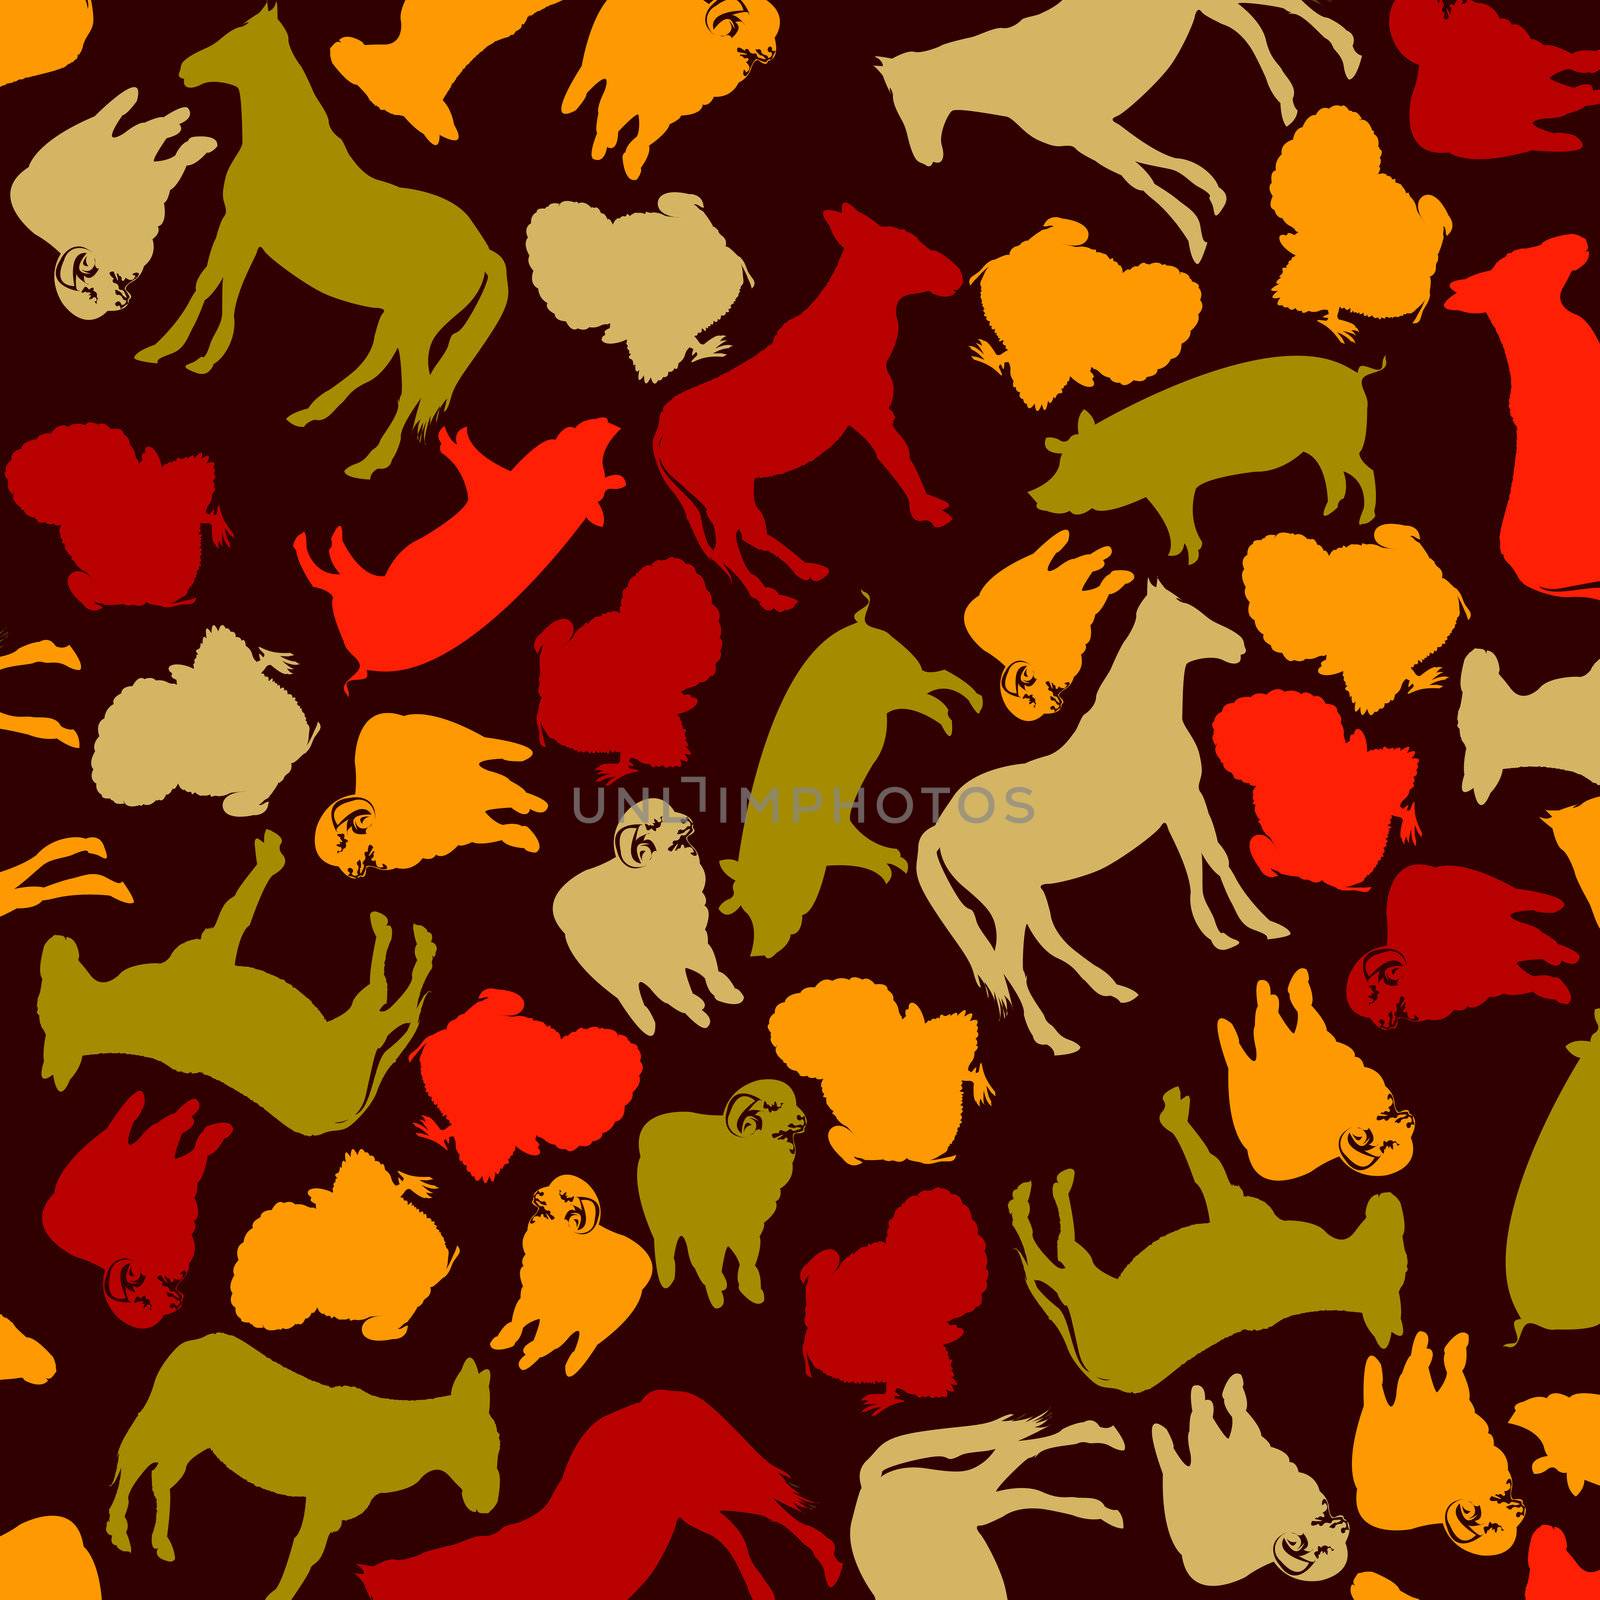 farm animals silhouettes by Lirch